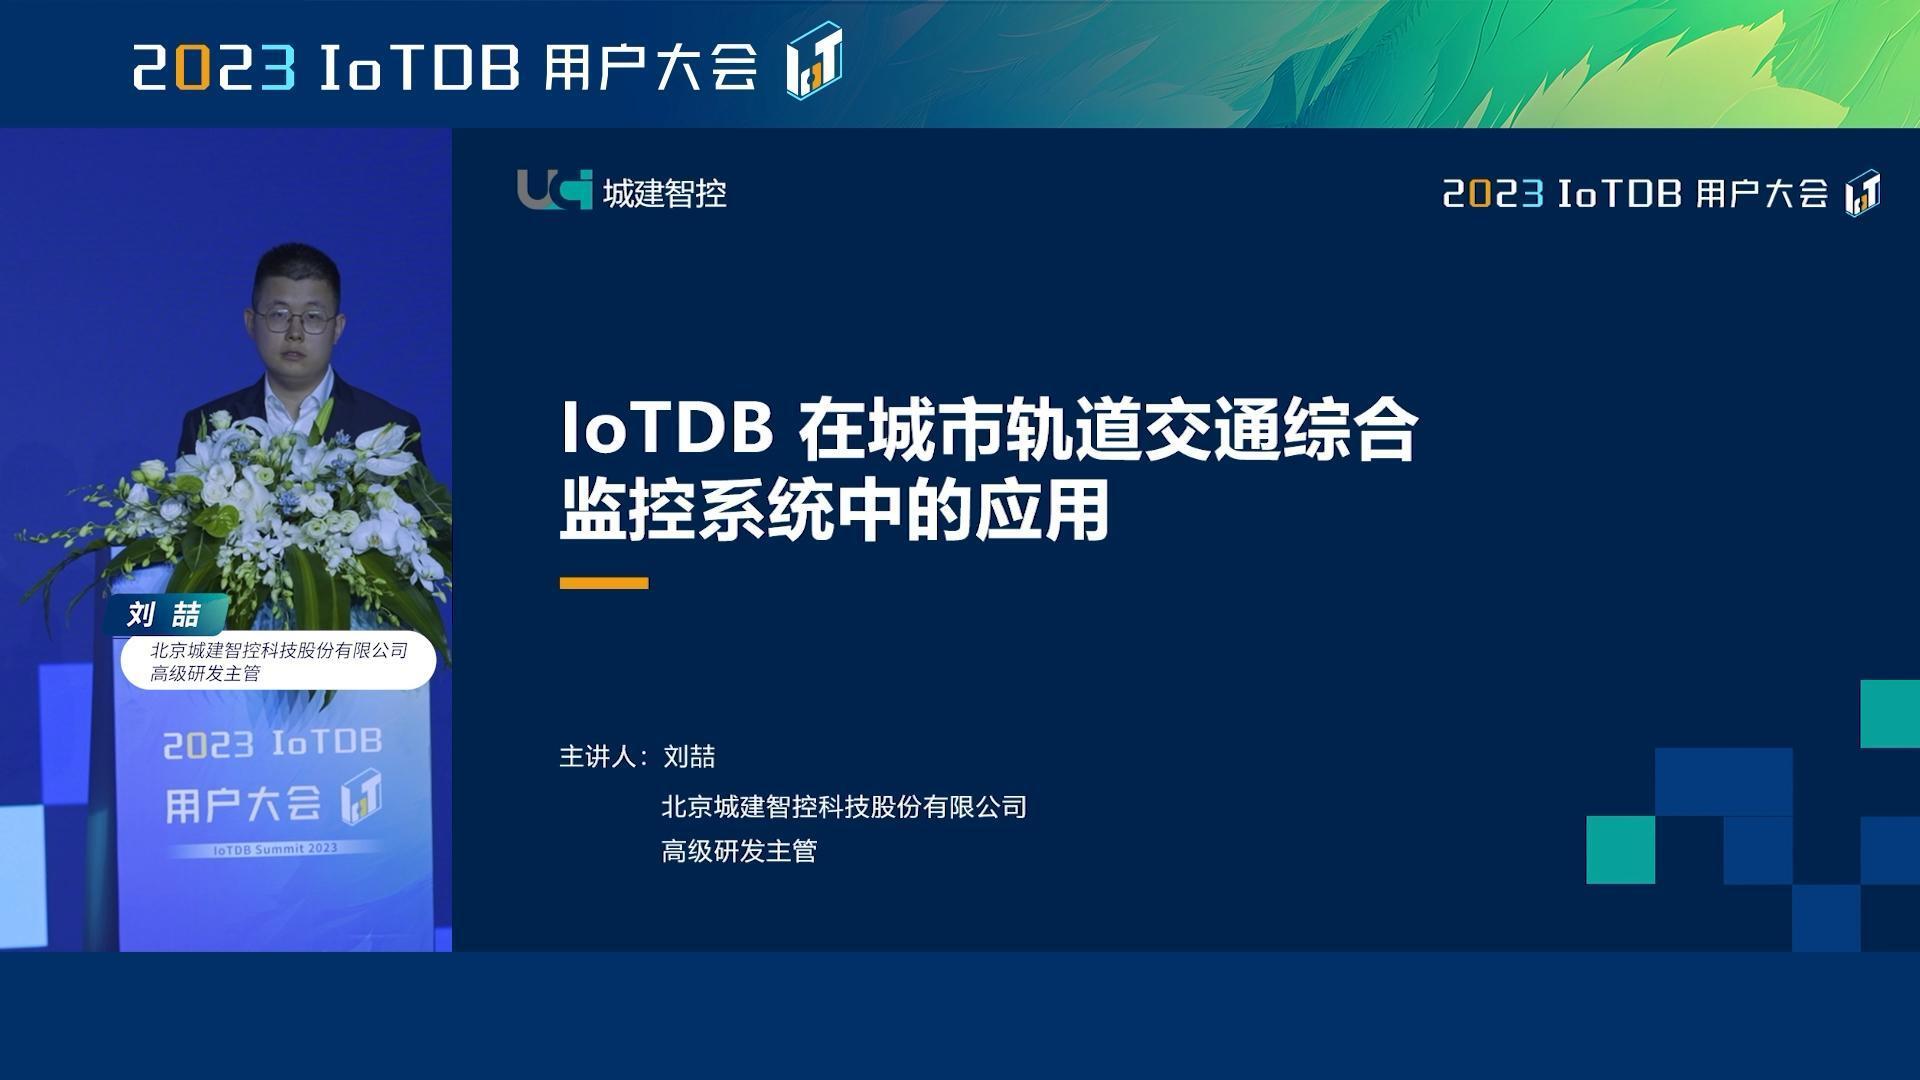 2023 IoTDB Summit：北京城建智控科技股份有限公司高级研发主管刘喆《IoTDB 在城市轨道交通综合监控系统中的应用》